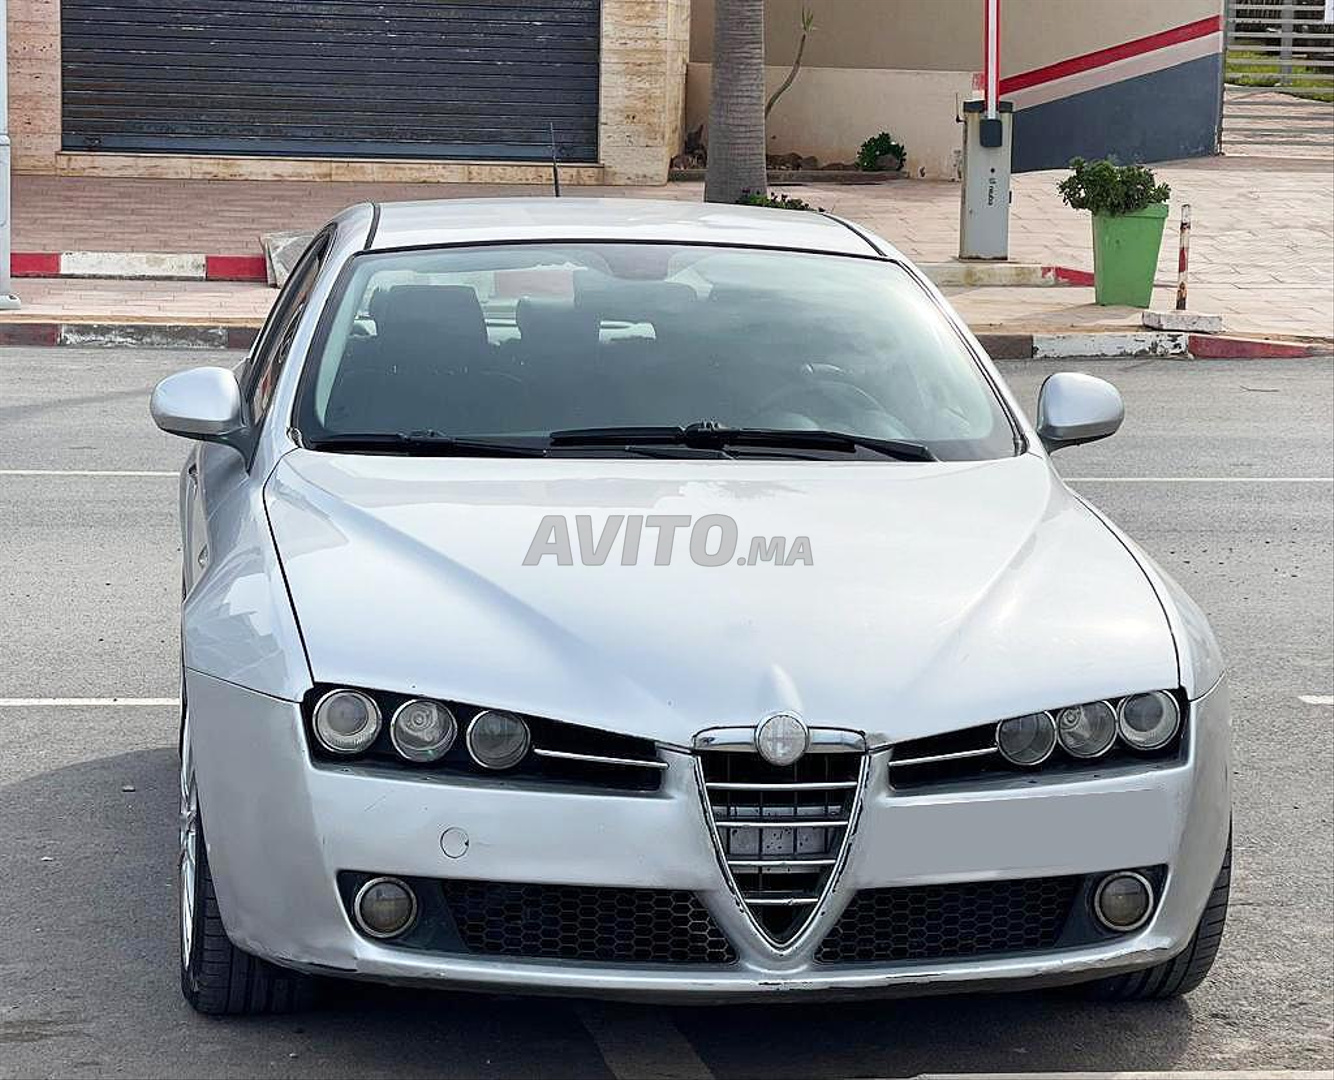 Alfa-Romeo 159 Au volant